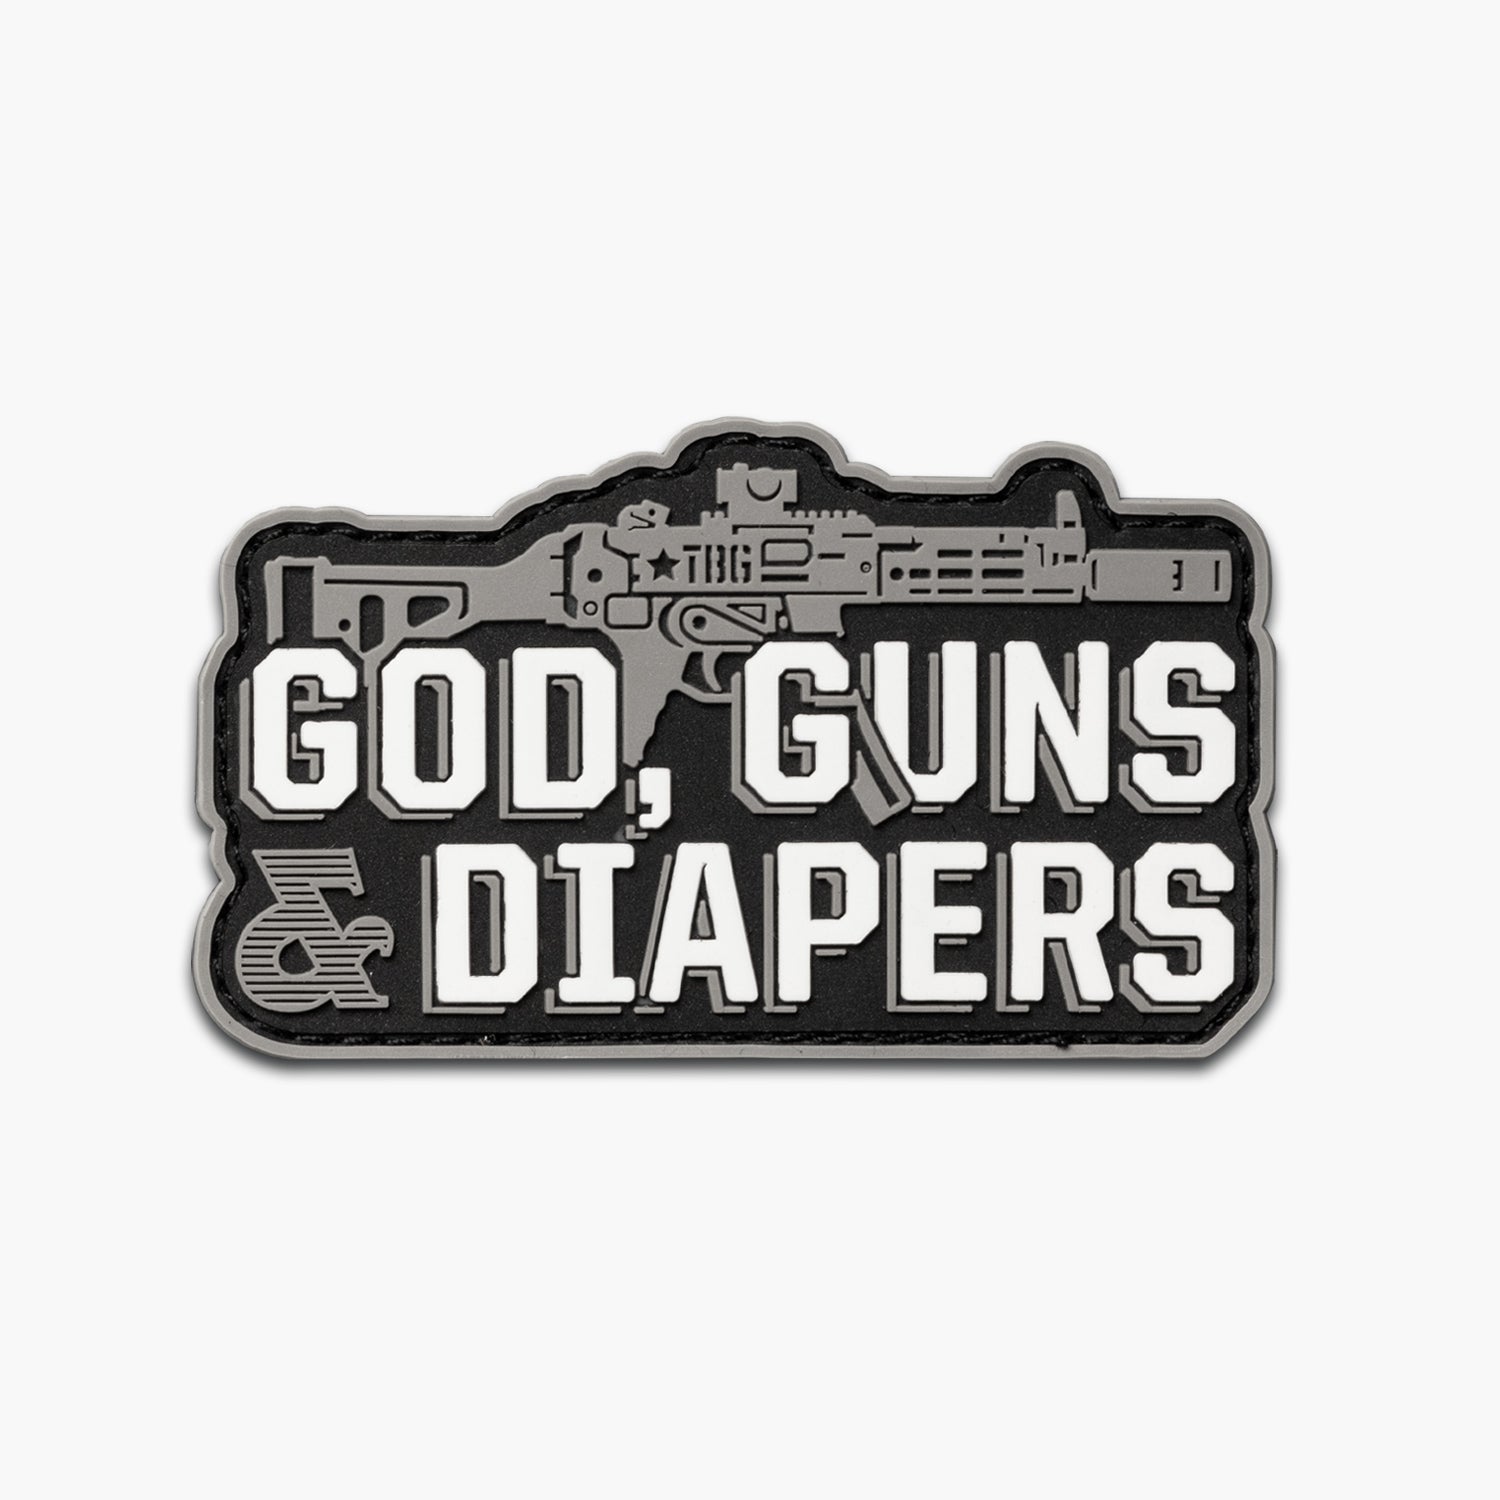 God Guns Diapers Patch - MP5